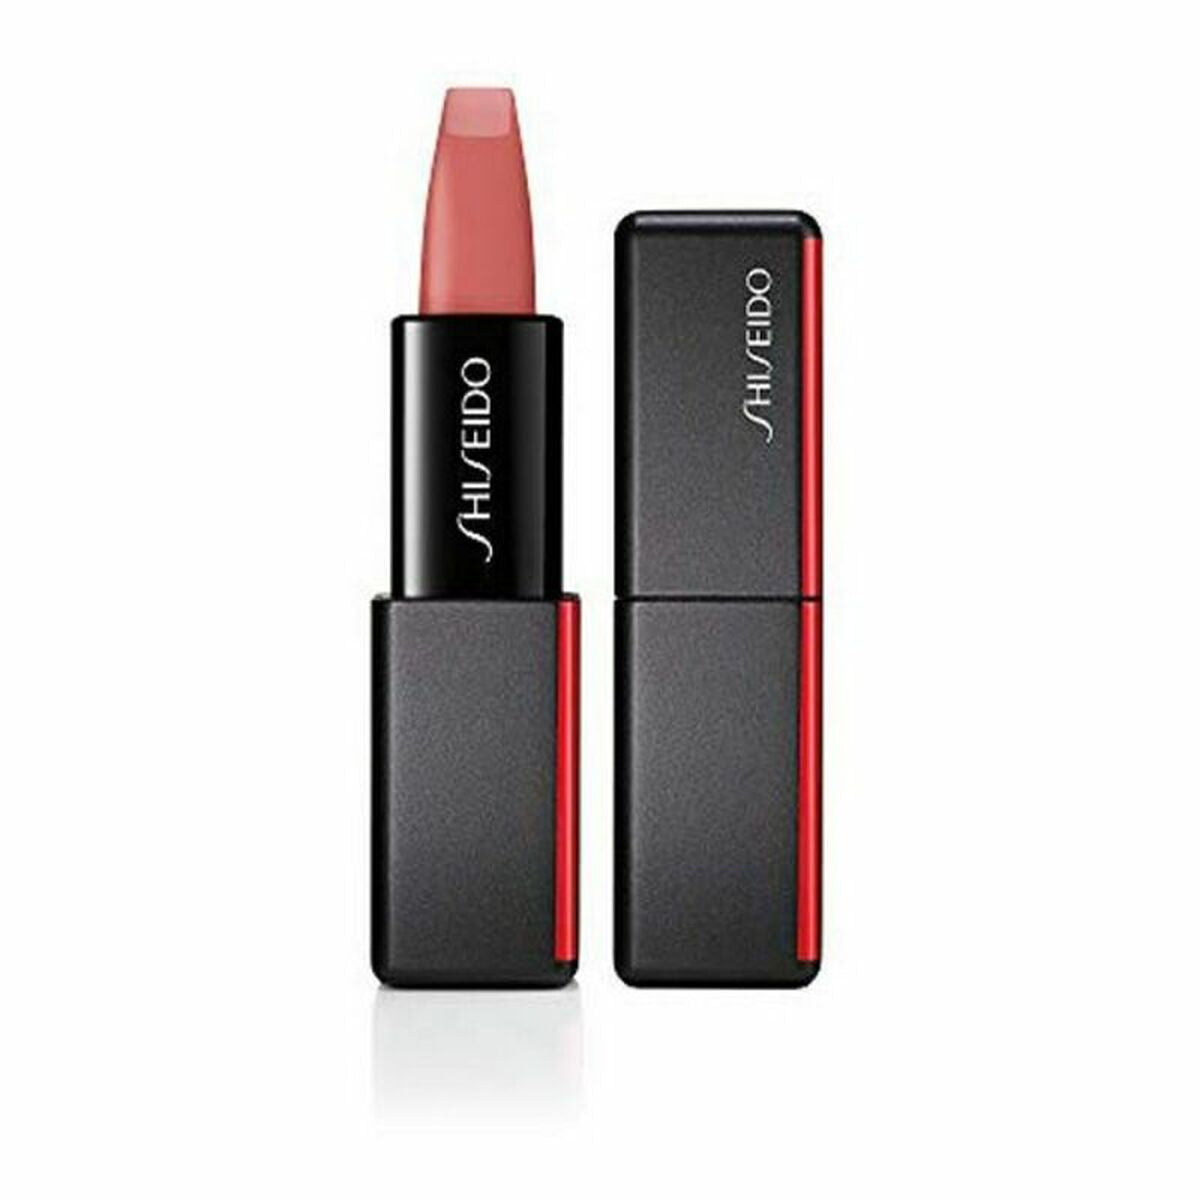 Huulipuna modernmate -jauhe Shiseido 4 g